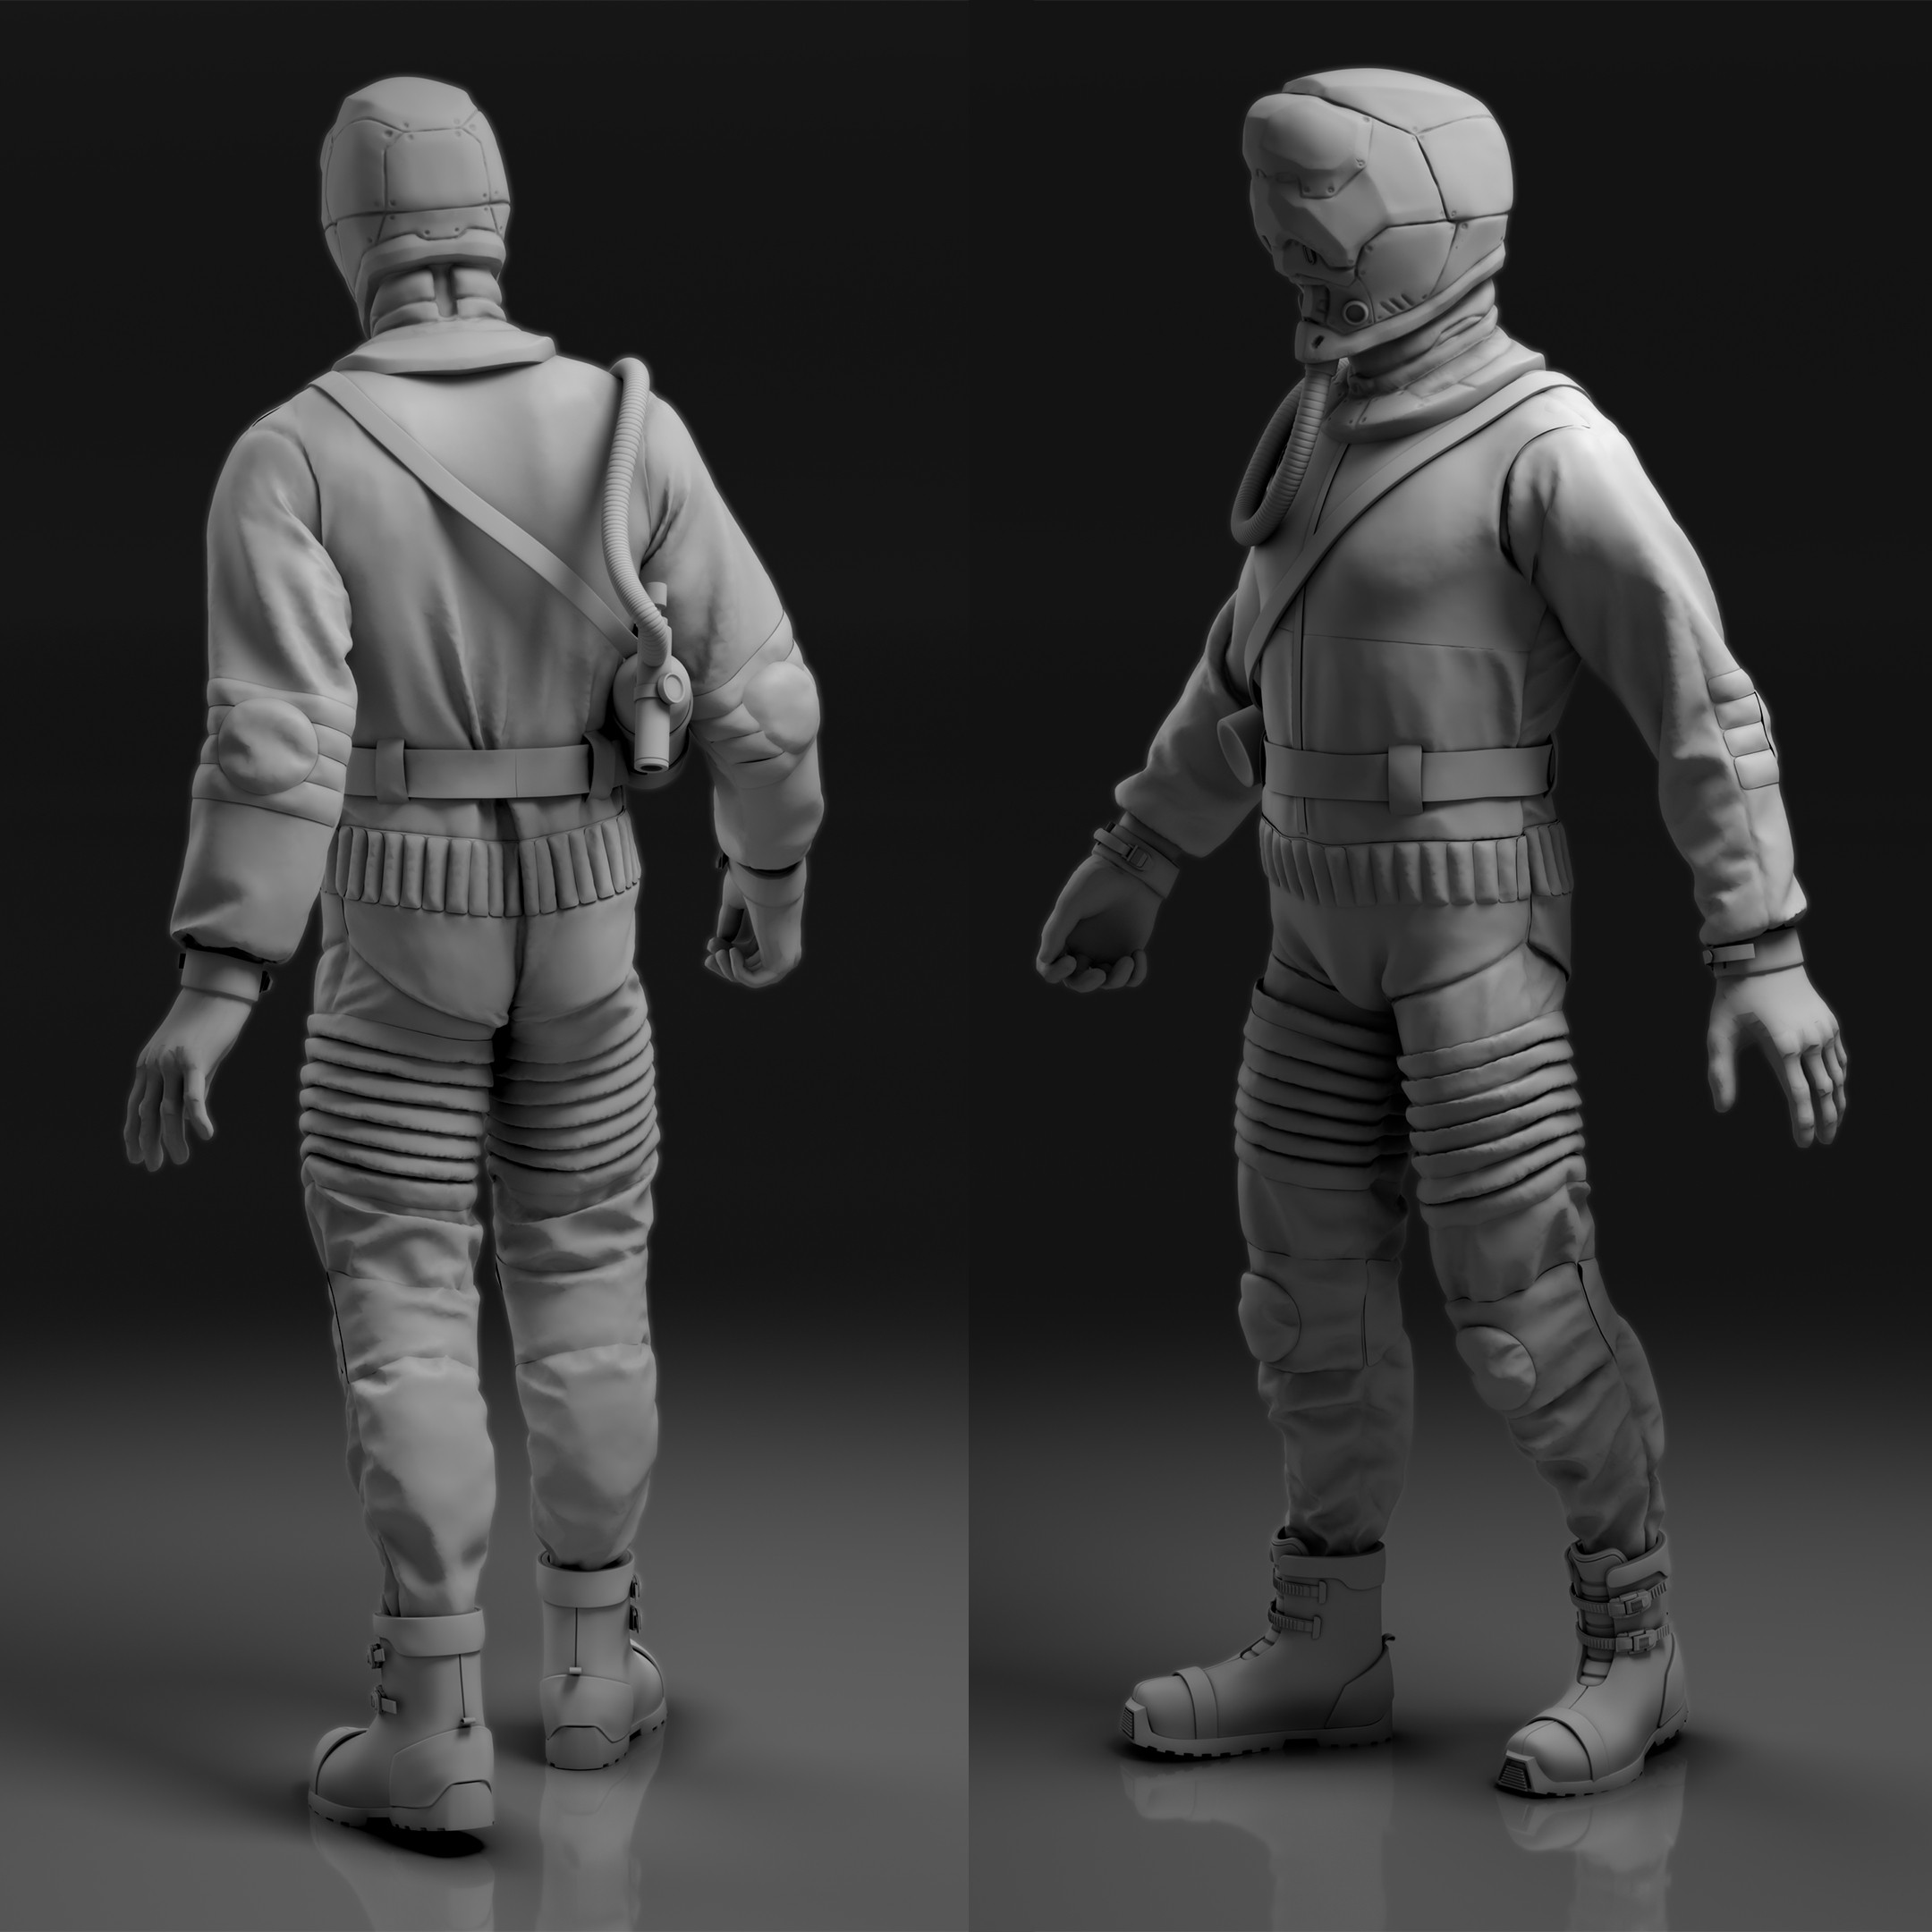 Sci-fi scientist/astronaut/worker 3d concept render.